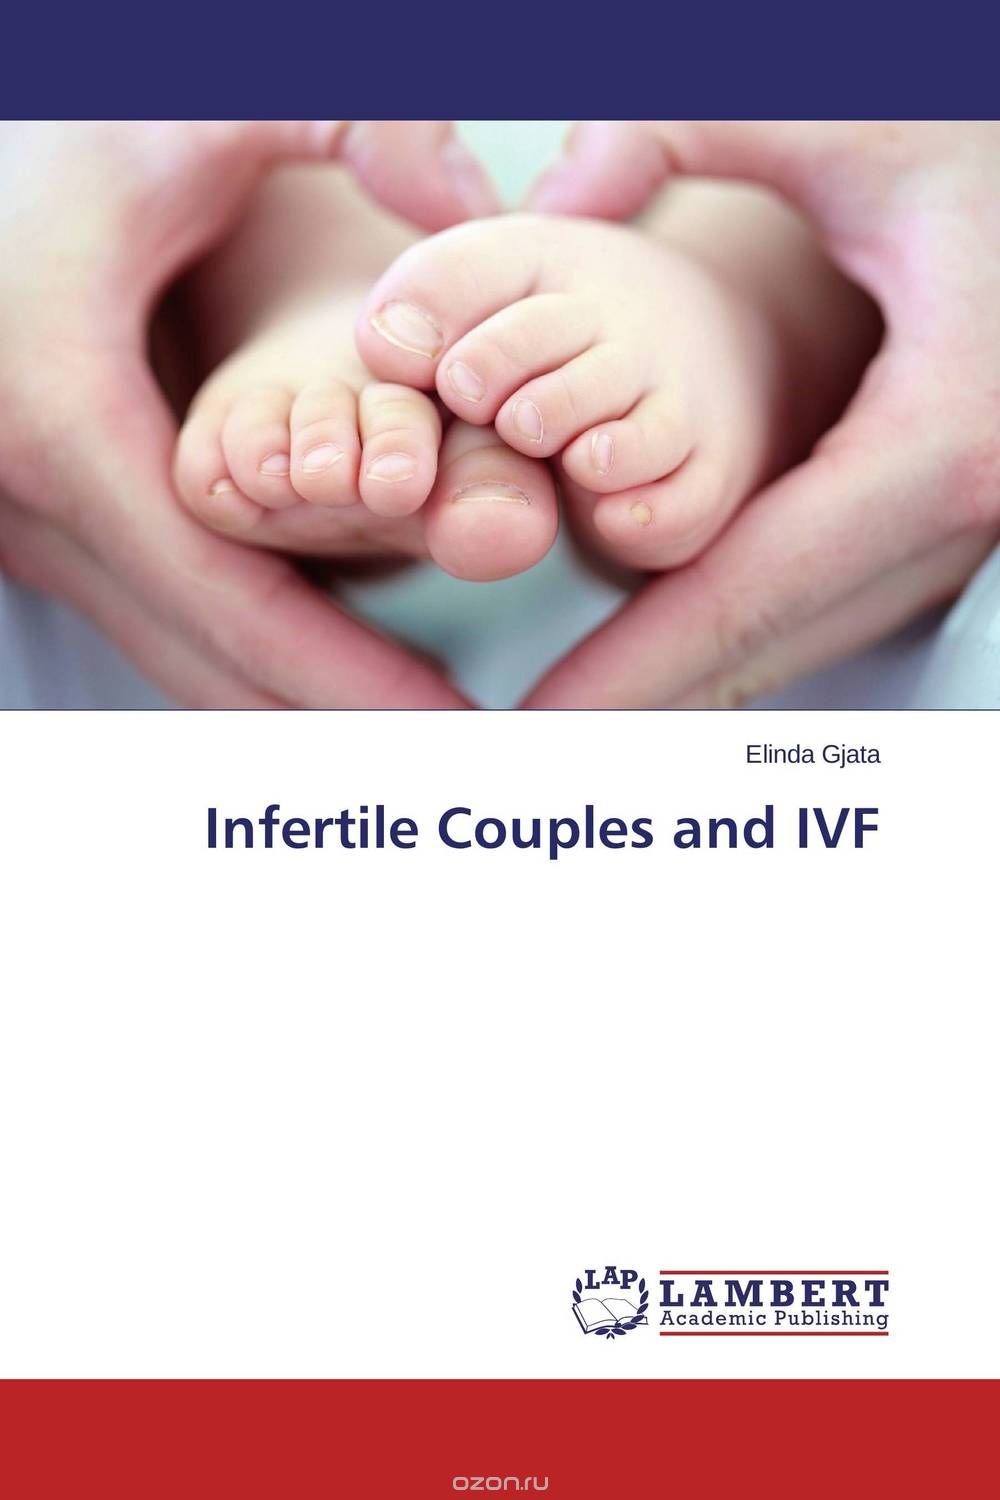 Скачать книгу "Infertile Couples and IVF"